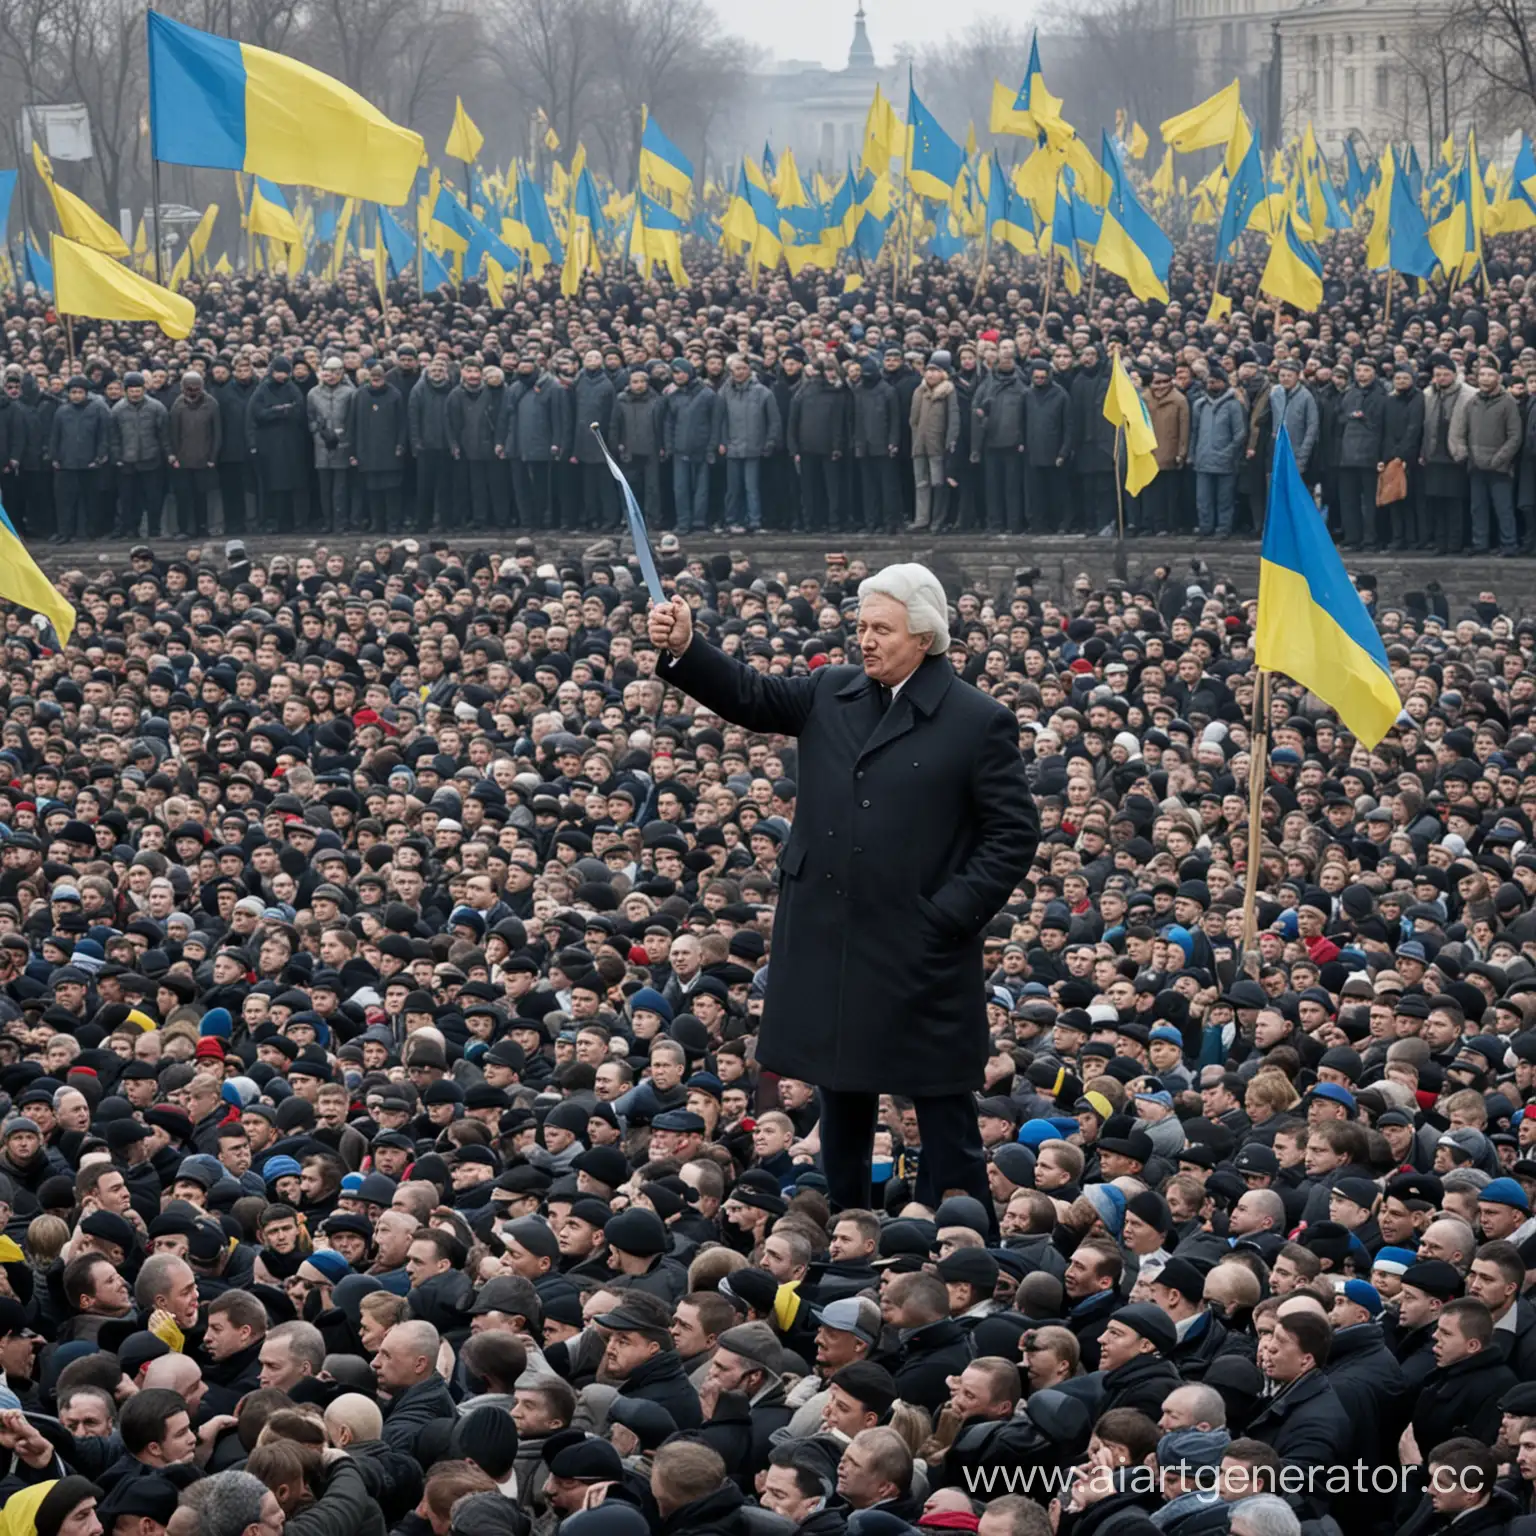 Ukrainians-Fighting-World-Leaders-in-Epic-Battle